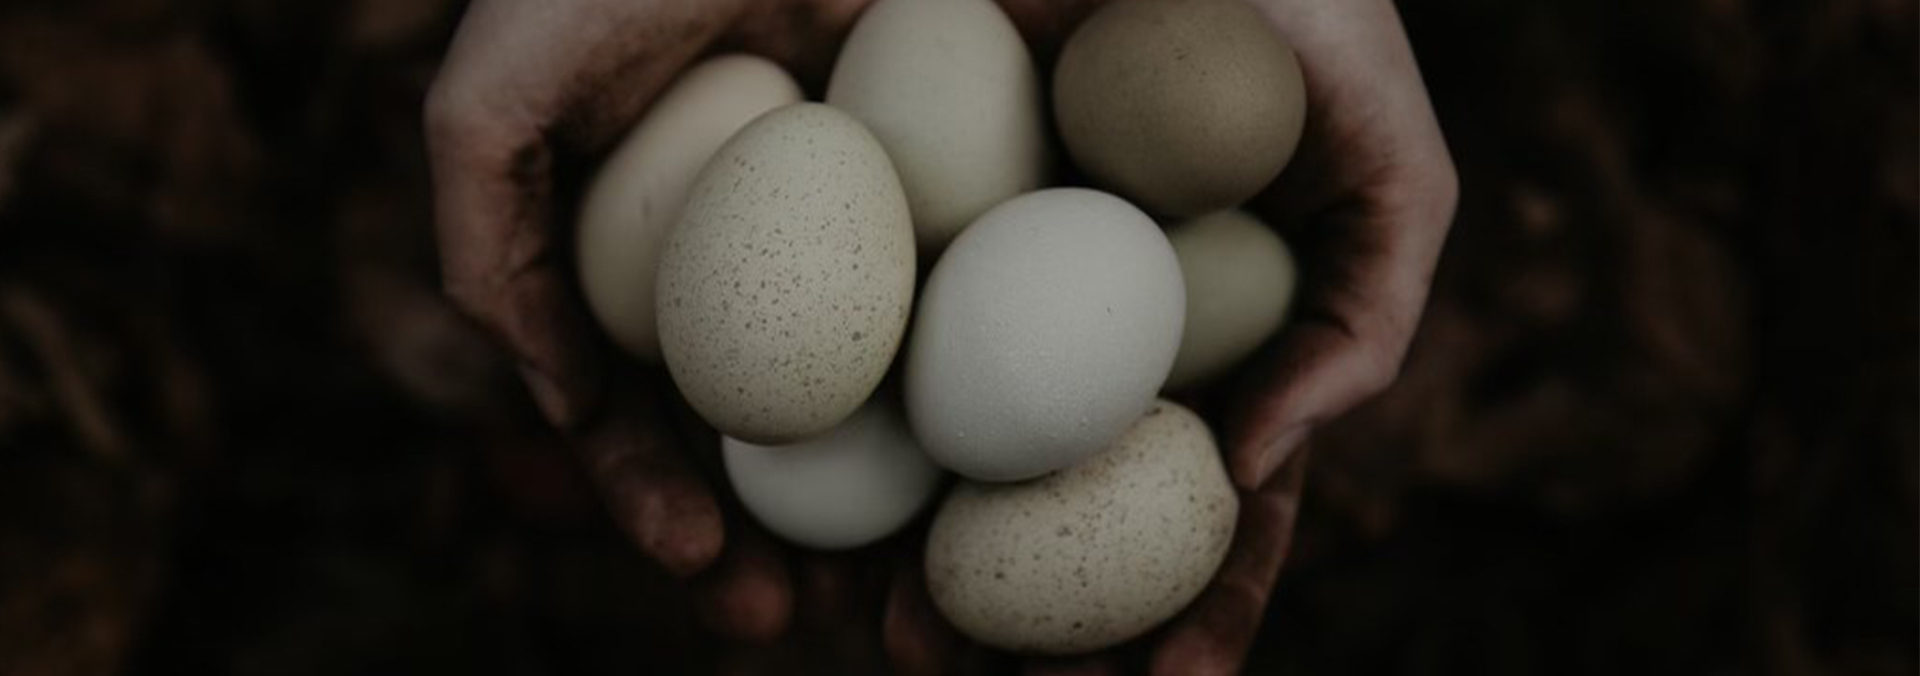 Silverudd’s Blue 12 rare breed hatching eggs assortment Cemani 